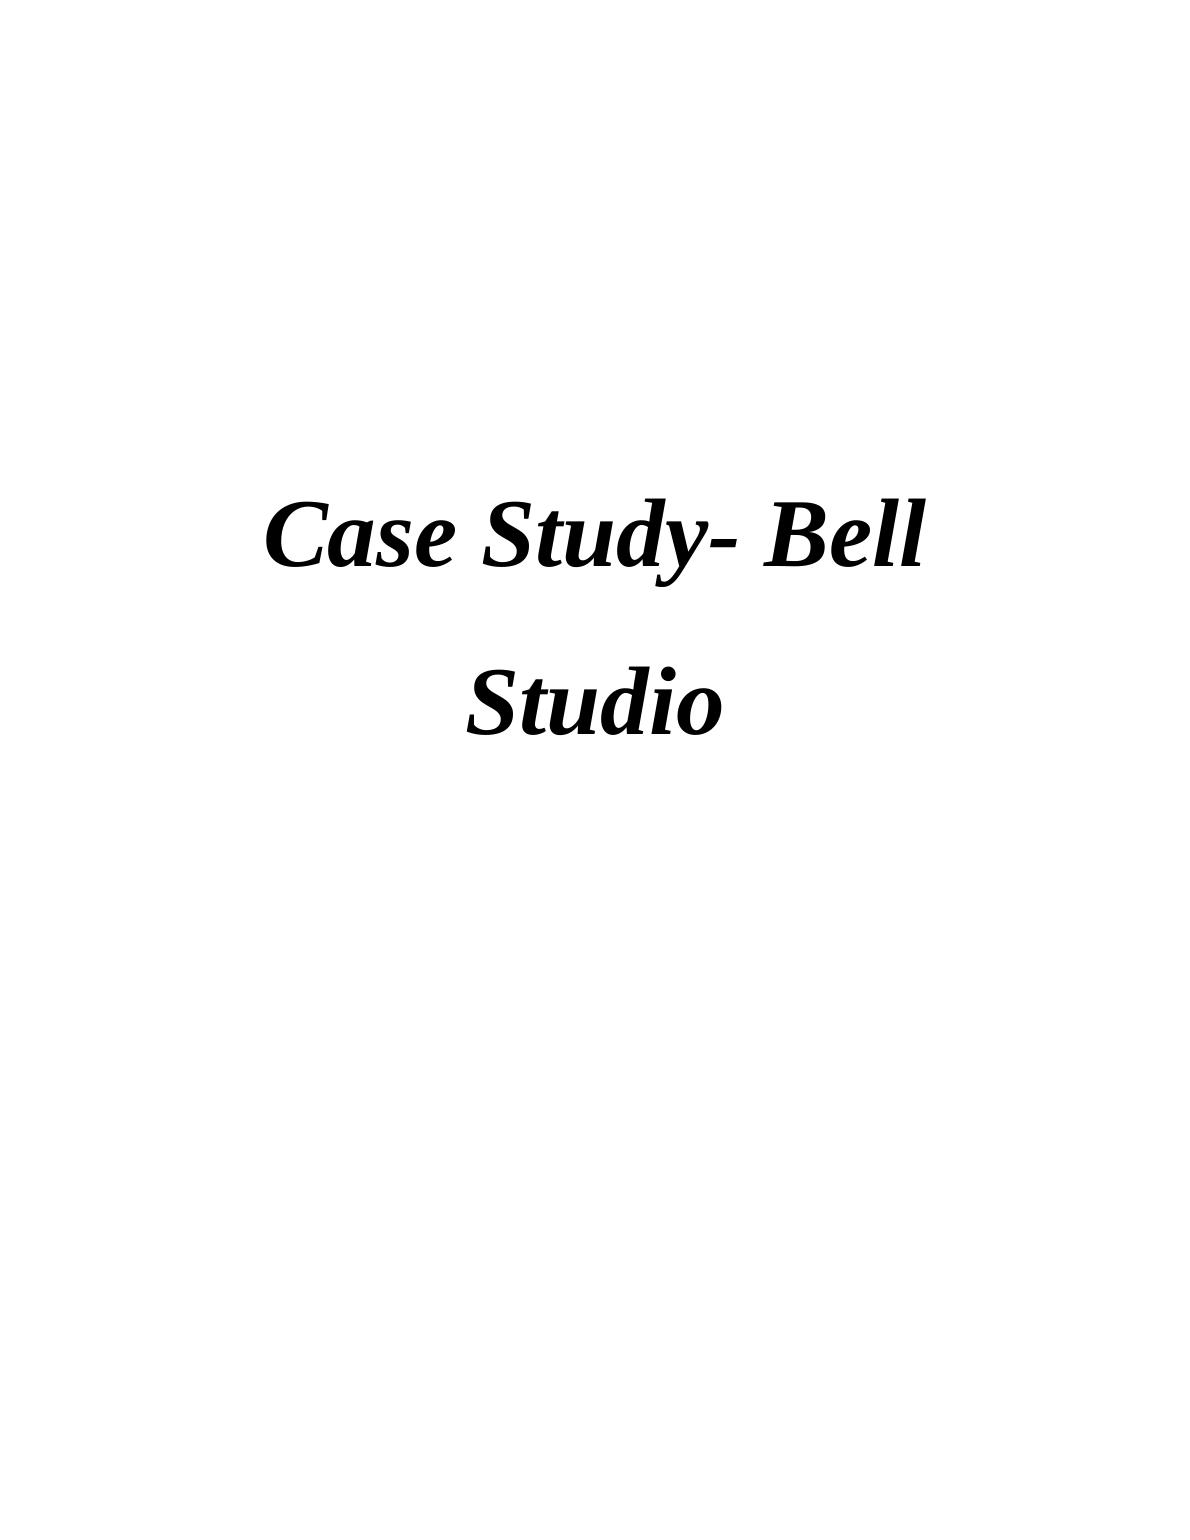 Bell Studio - Case Study Assignment_1